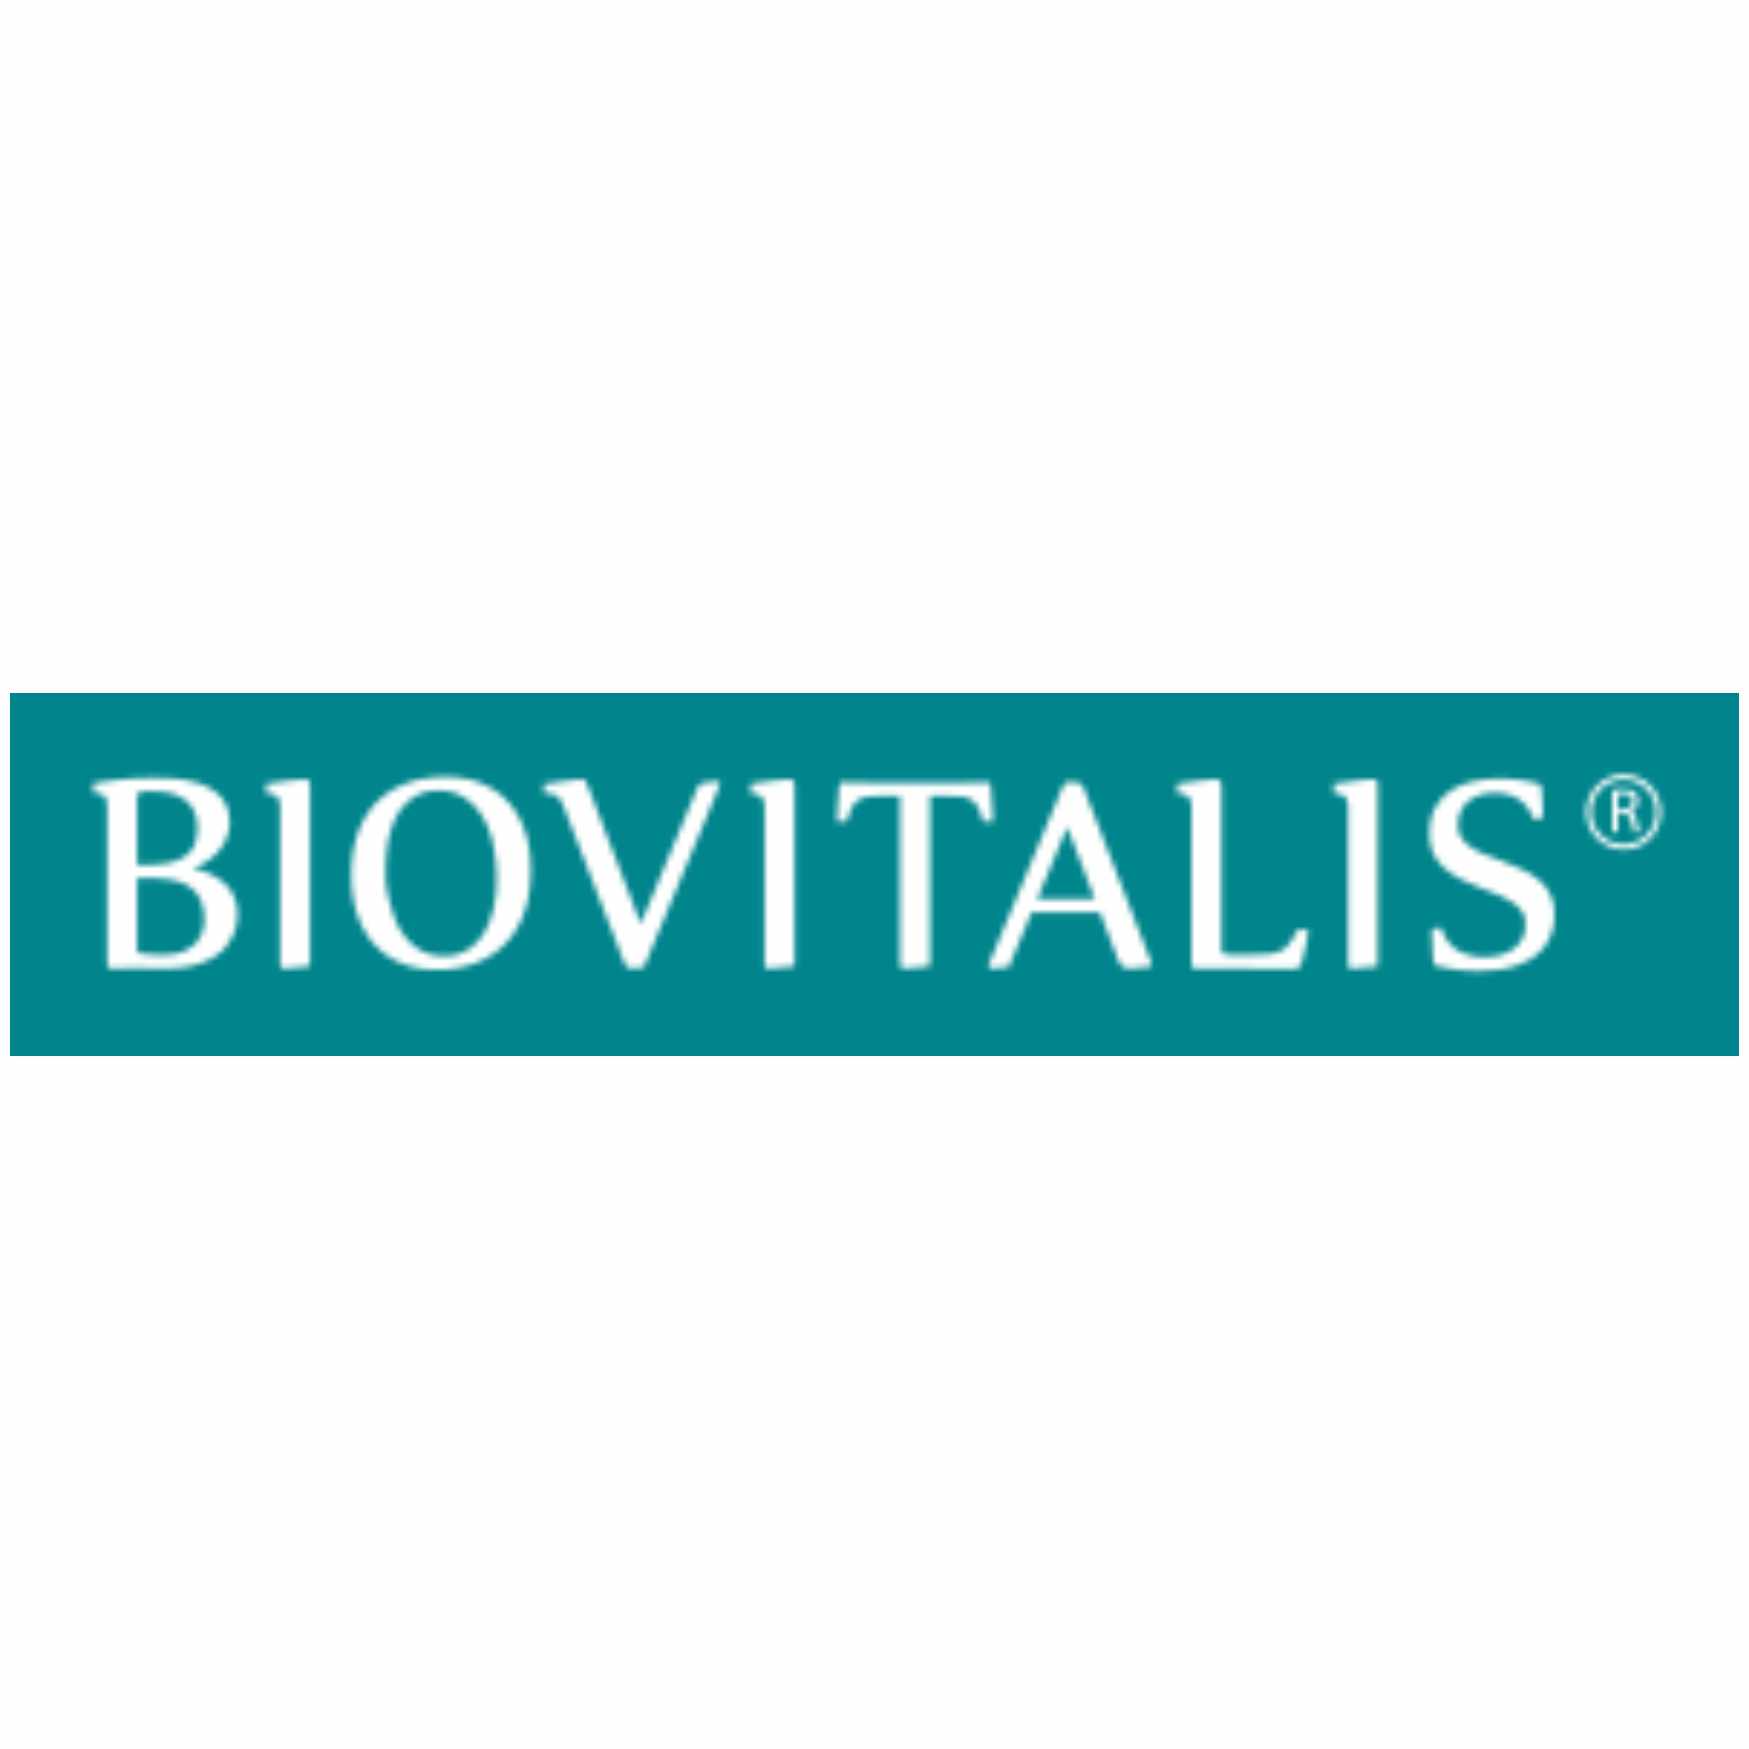 Biovitalis